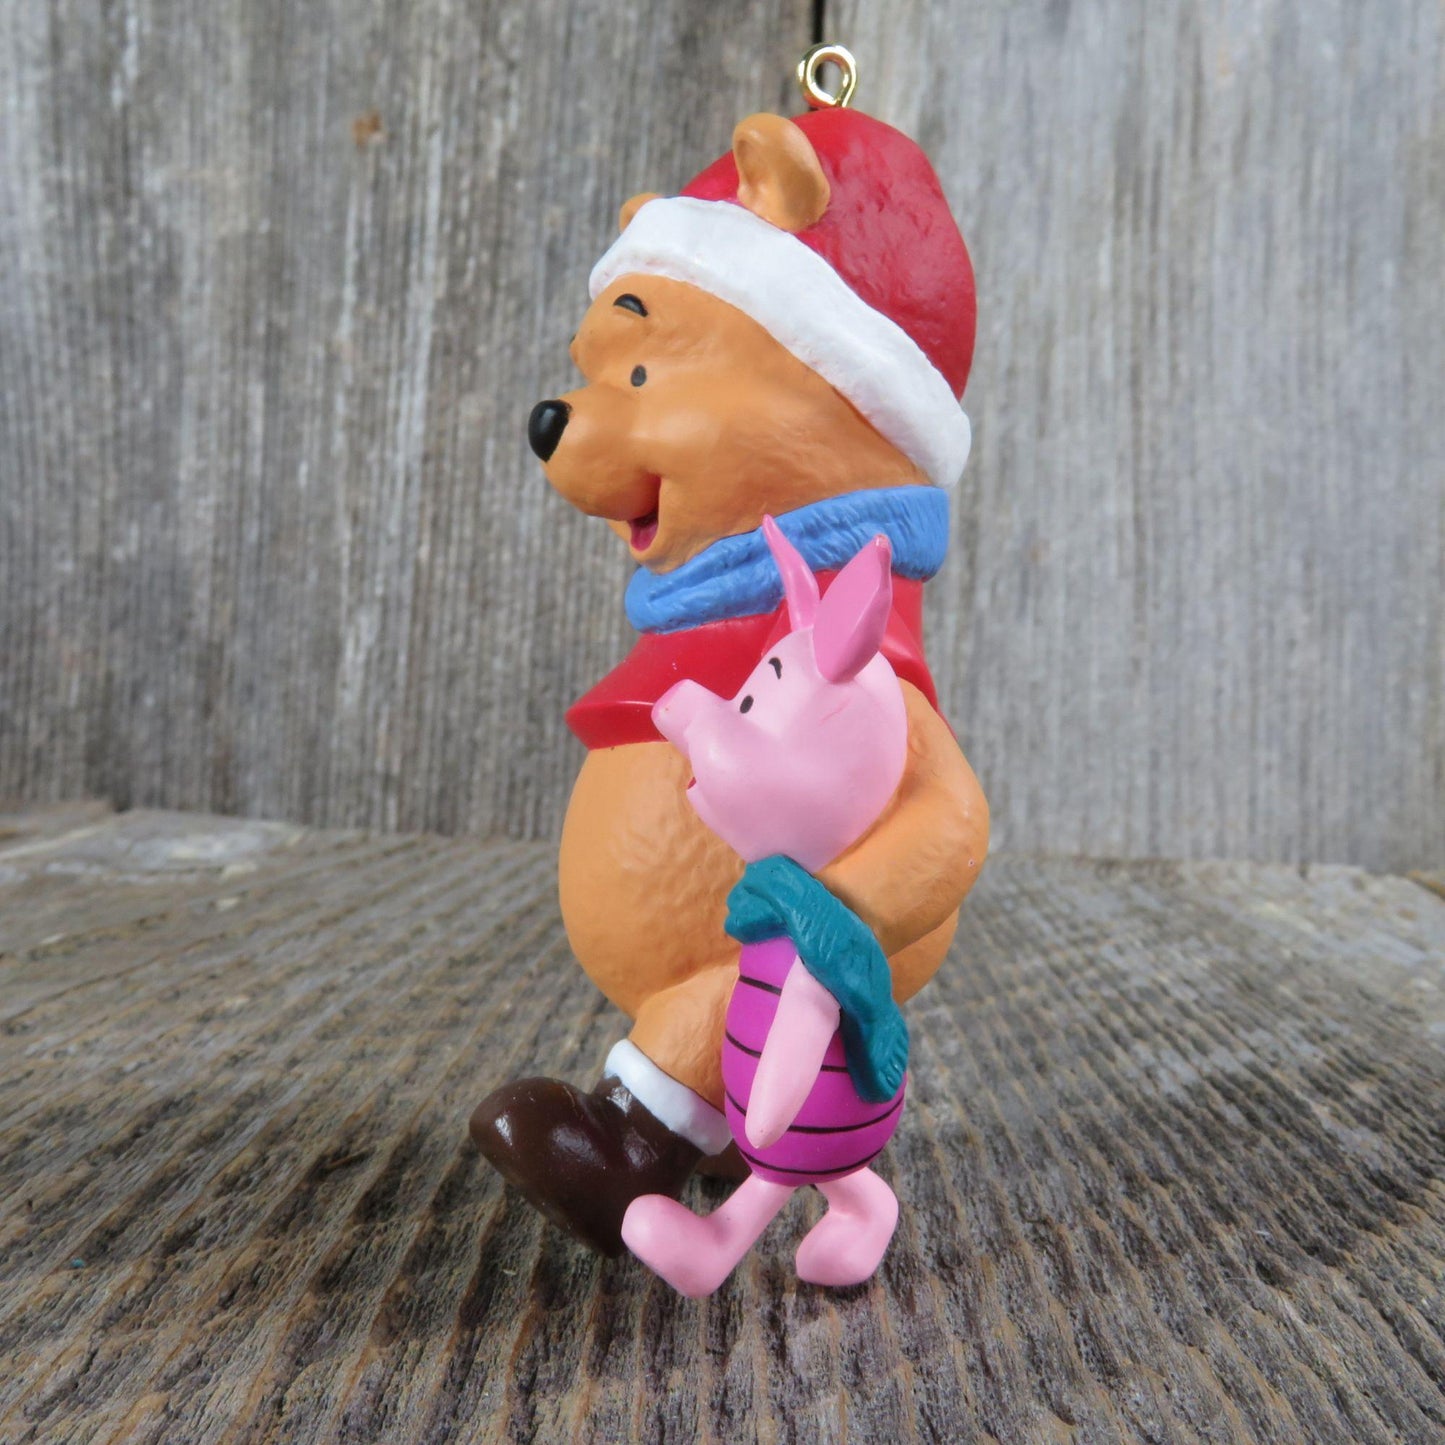 Vintage Winnie the Pooh and Piglet Ornament Disney Hallmark Christmas 1996